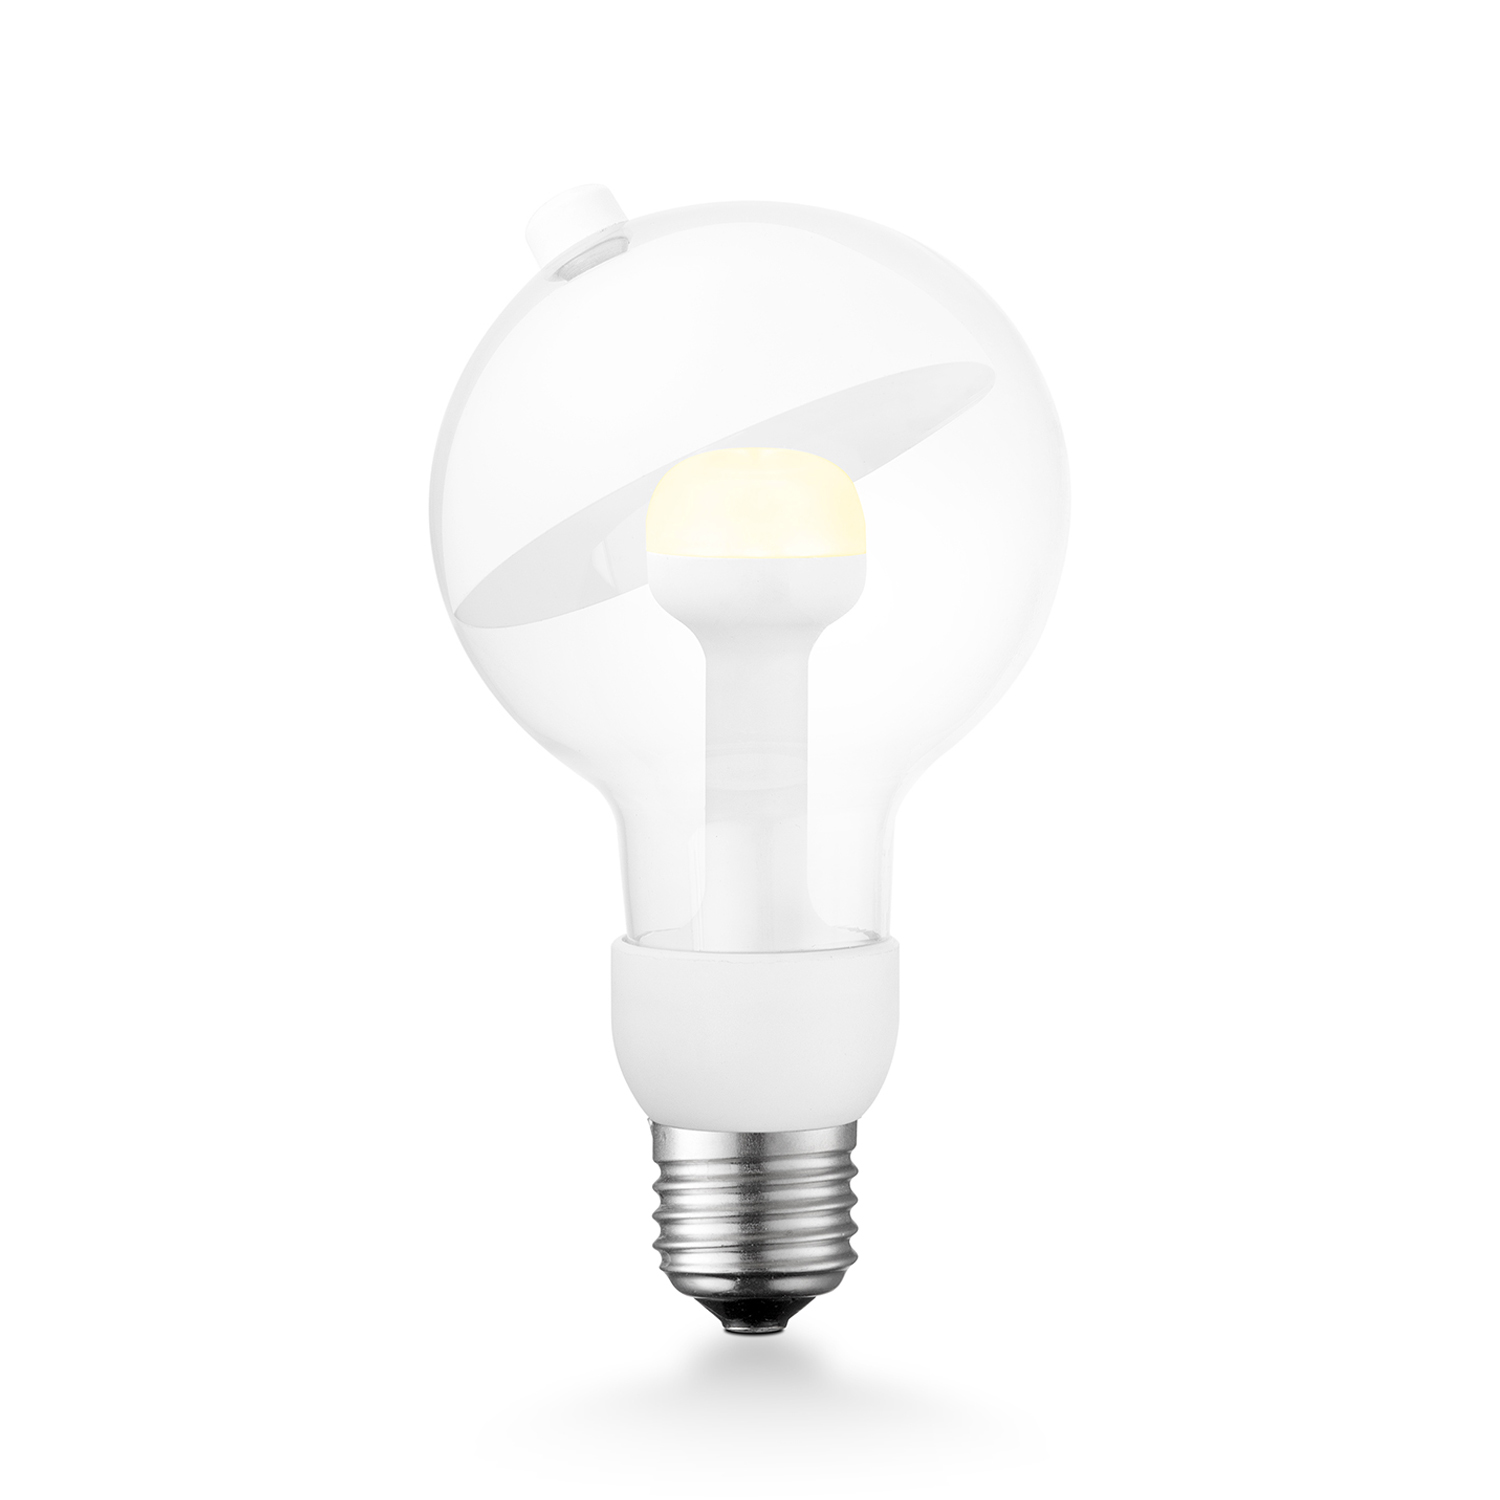 Tangla lighting - 0372-01-N - LED Light Bulb Move me - G80 3W Sphere white - E27 / E26